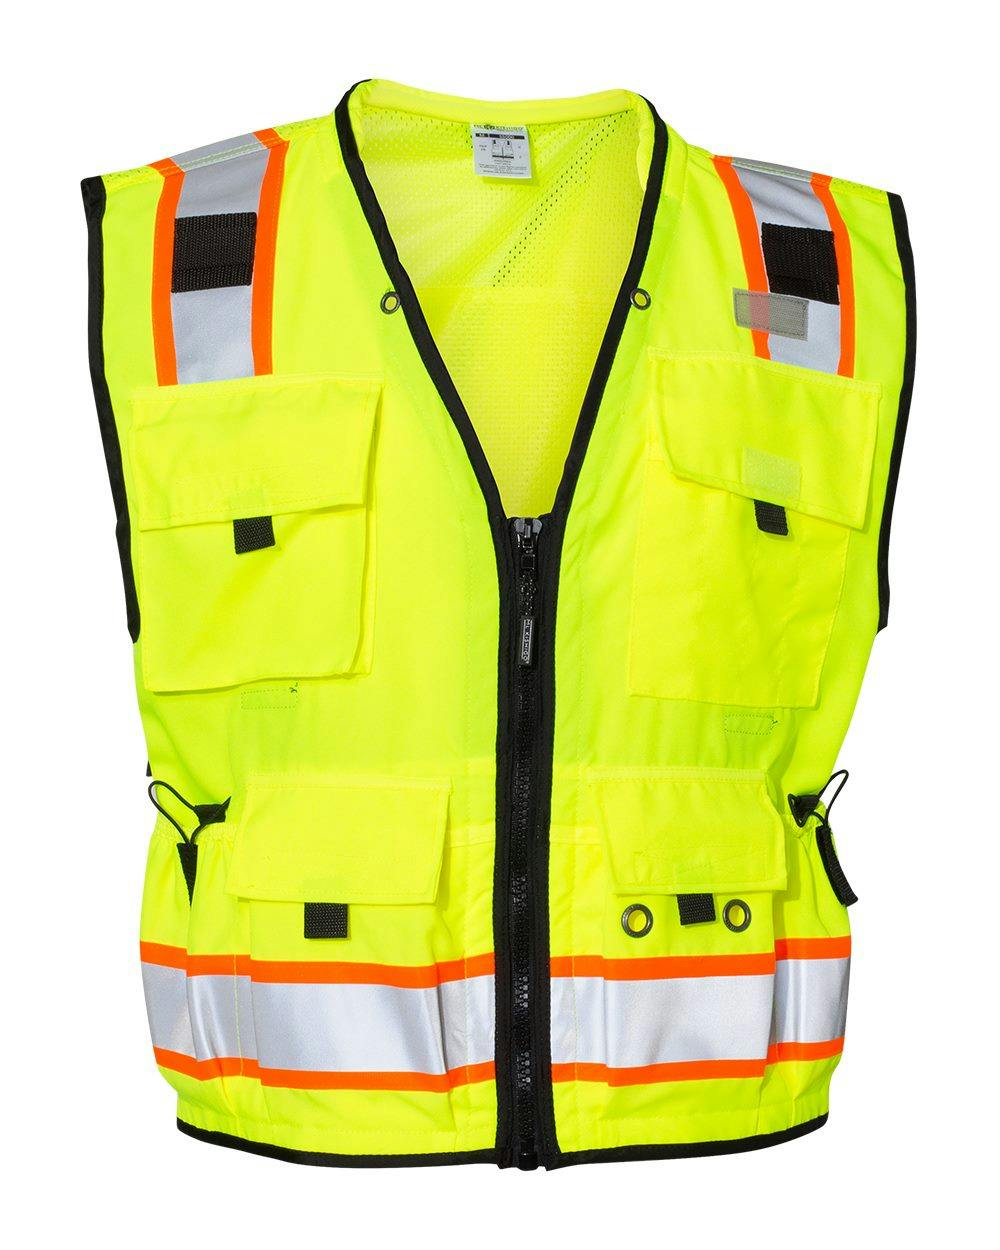 Image for Professional Surveyors Vest - S5000-5001